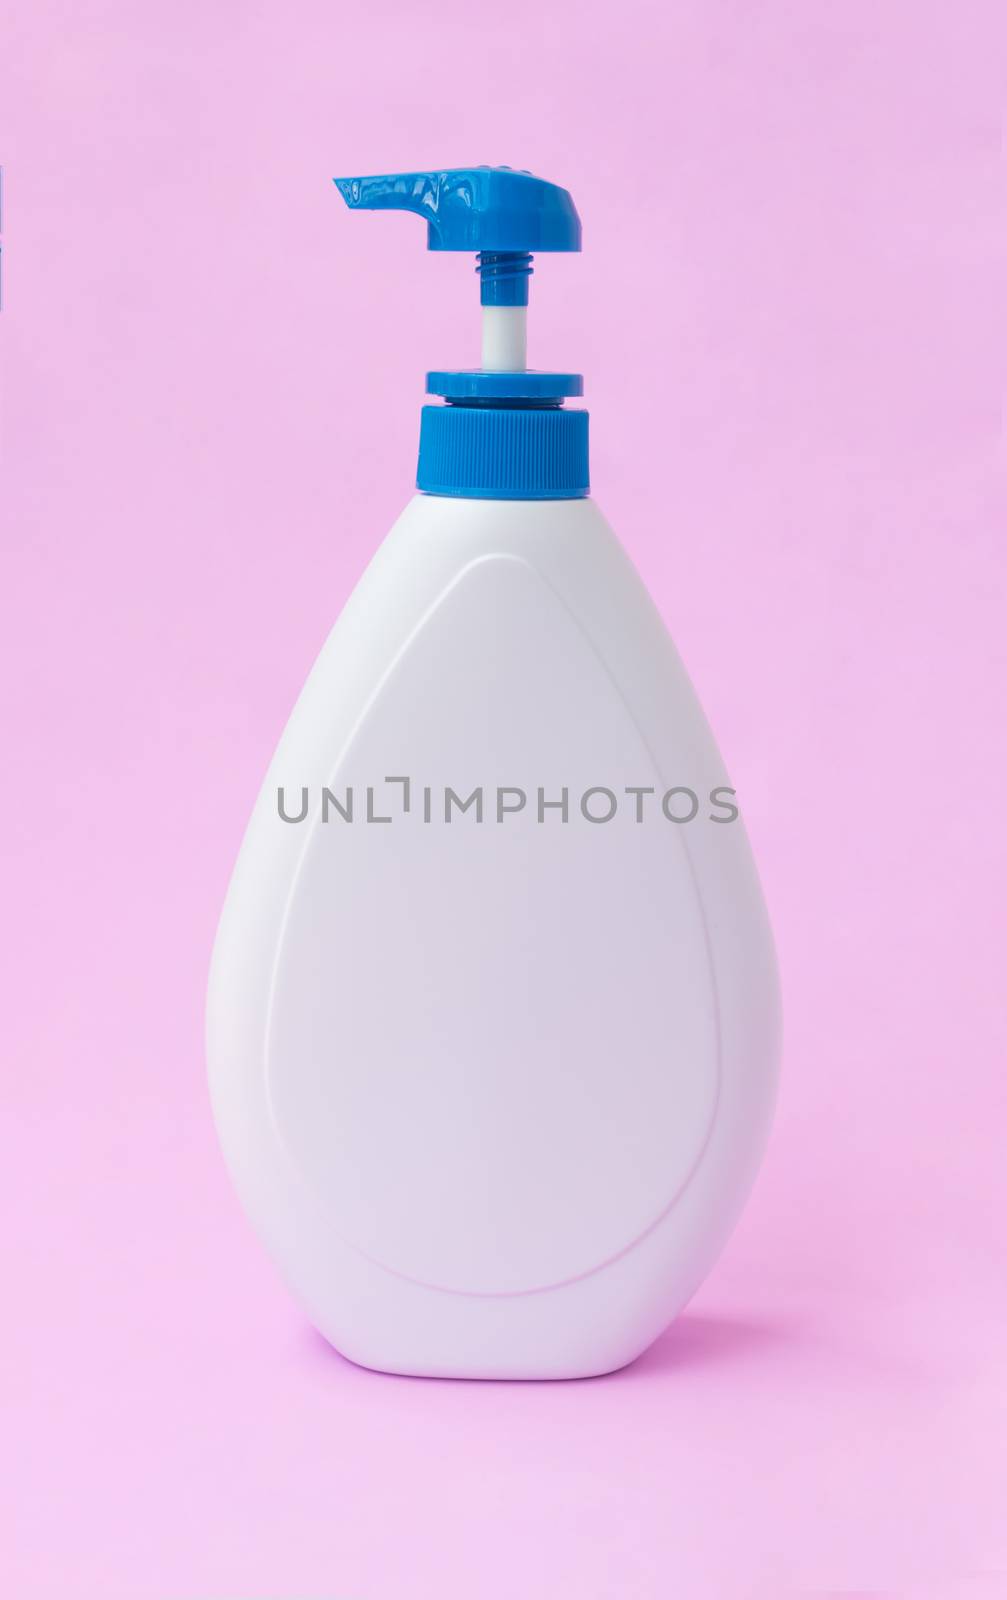 White lotion bottle on pink background, beauty skin care concept by pt.pongsak@gmail.com